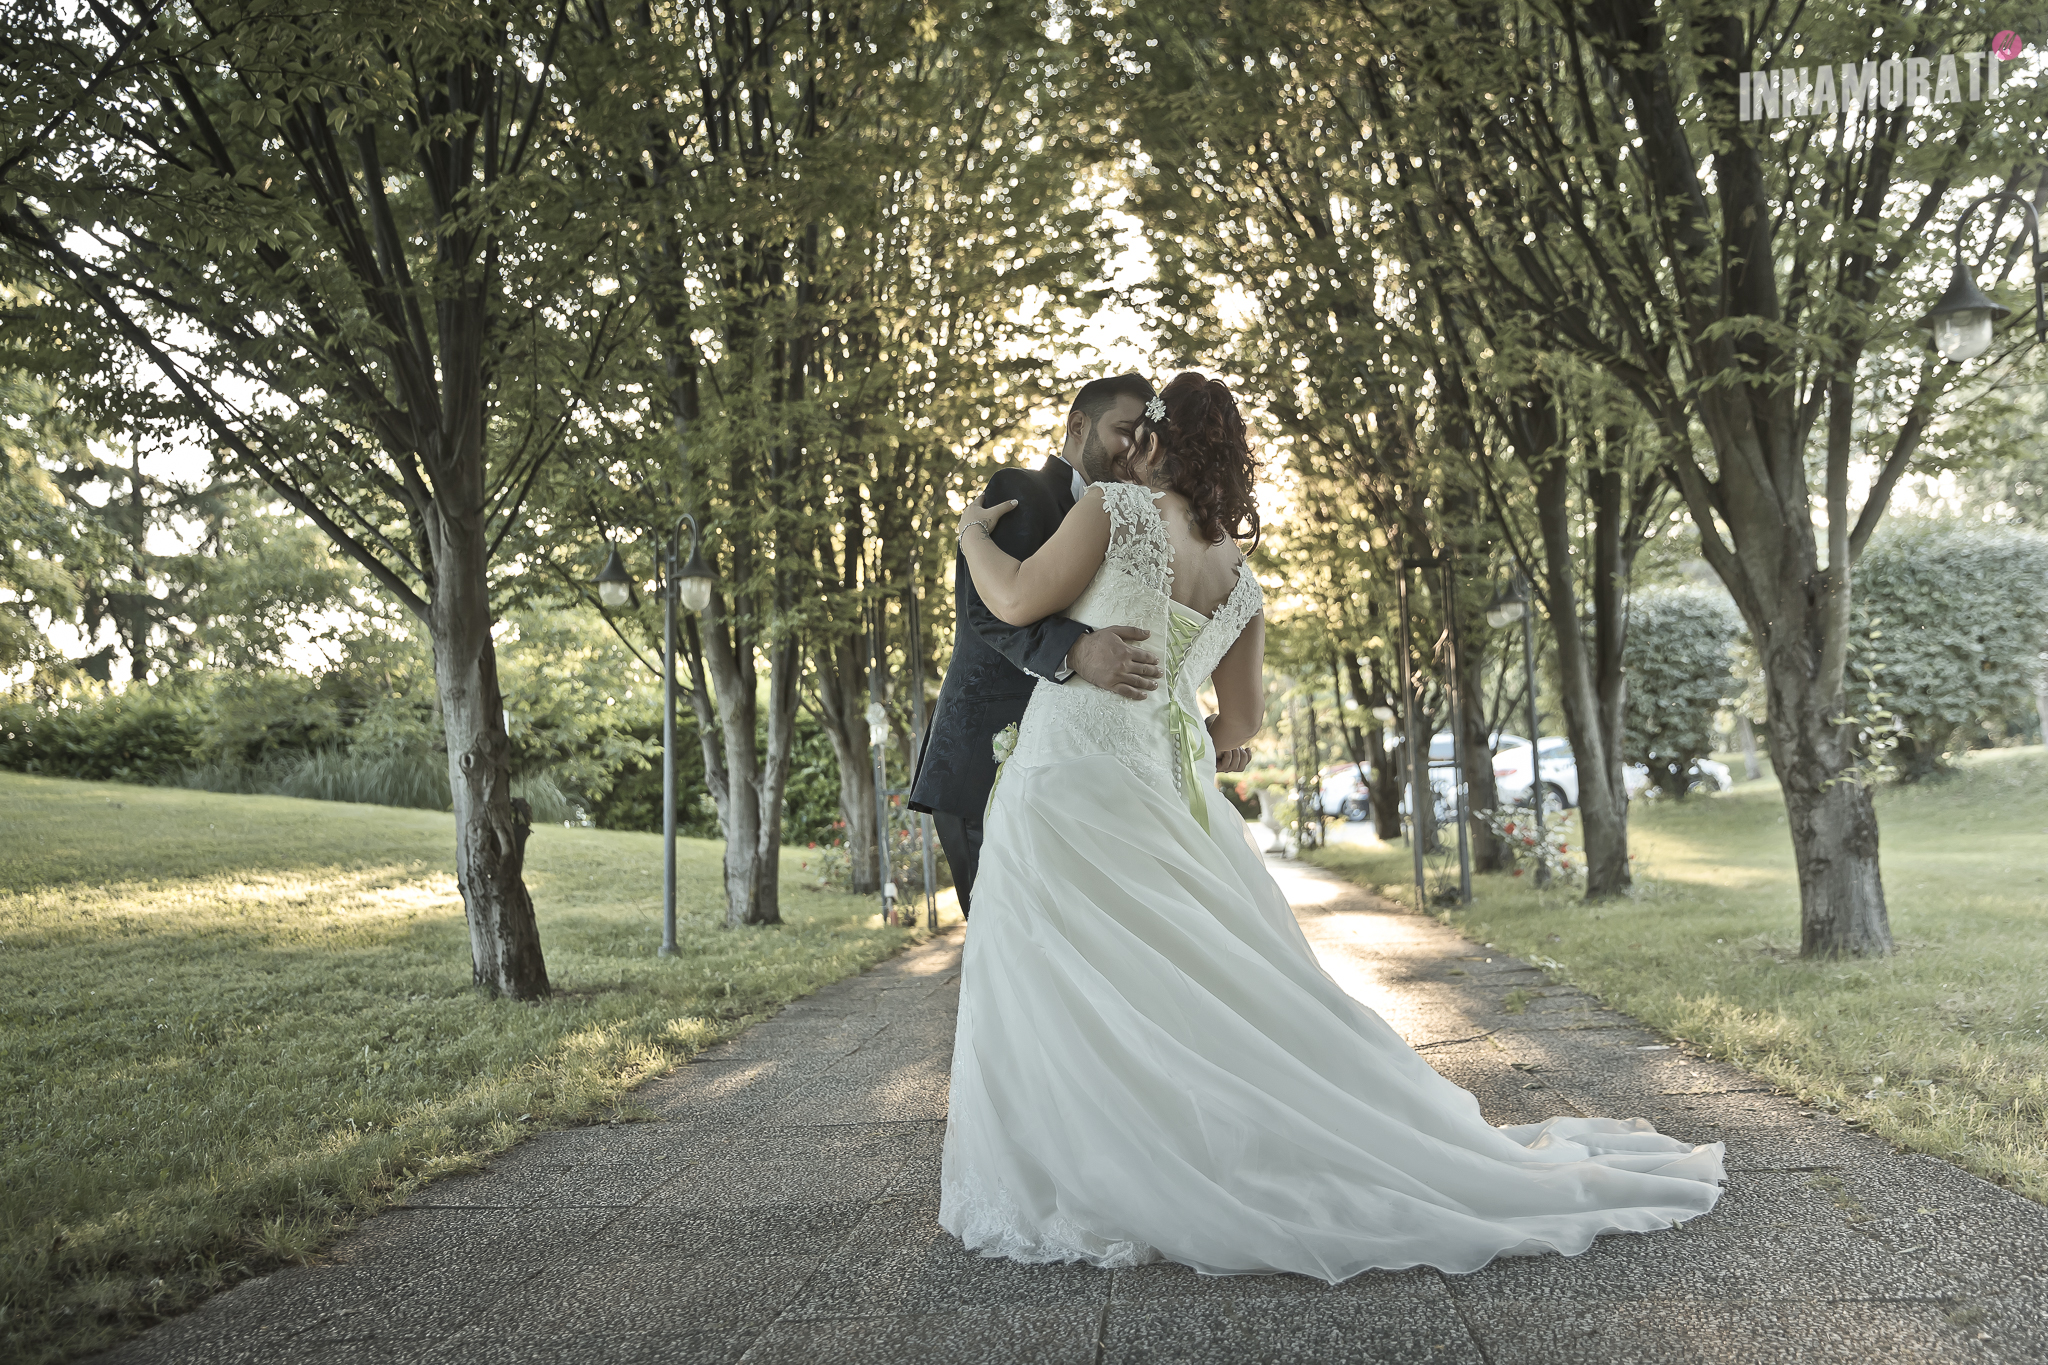 Boschetti Green Park Matrimonio